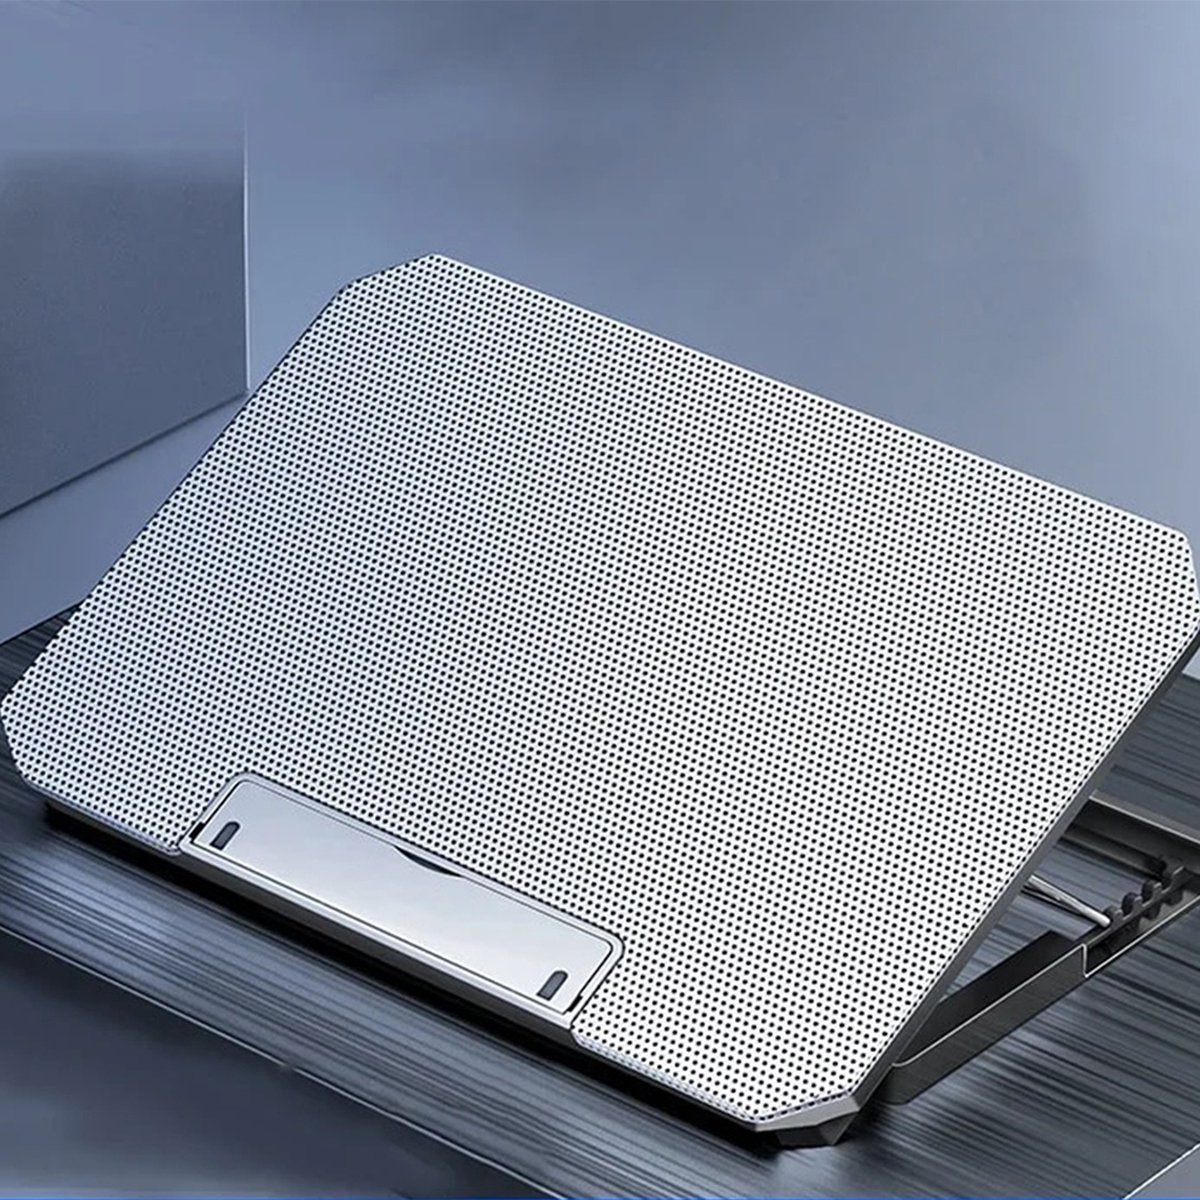 Luxe Design Zilvere Laptop Cooler - Laptop Stand - Laptop verhoging - Standaard - Cooling Pad - Laptop Cooler